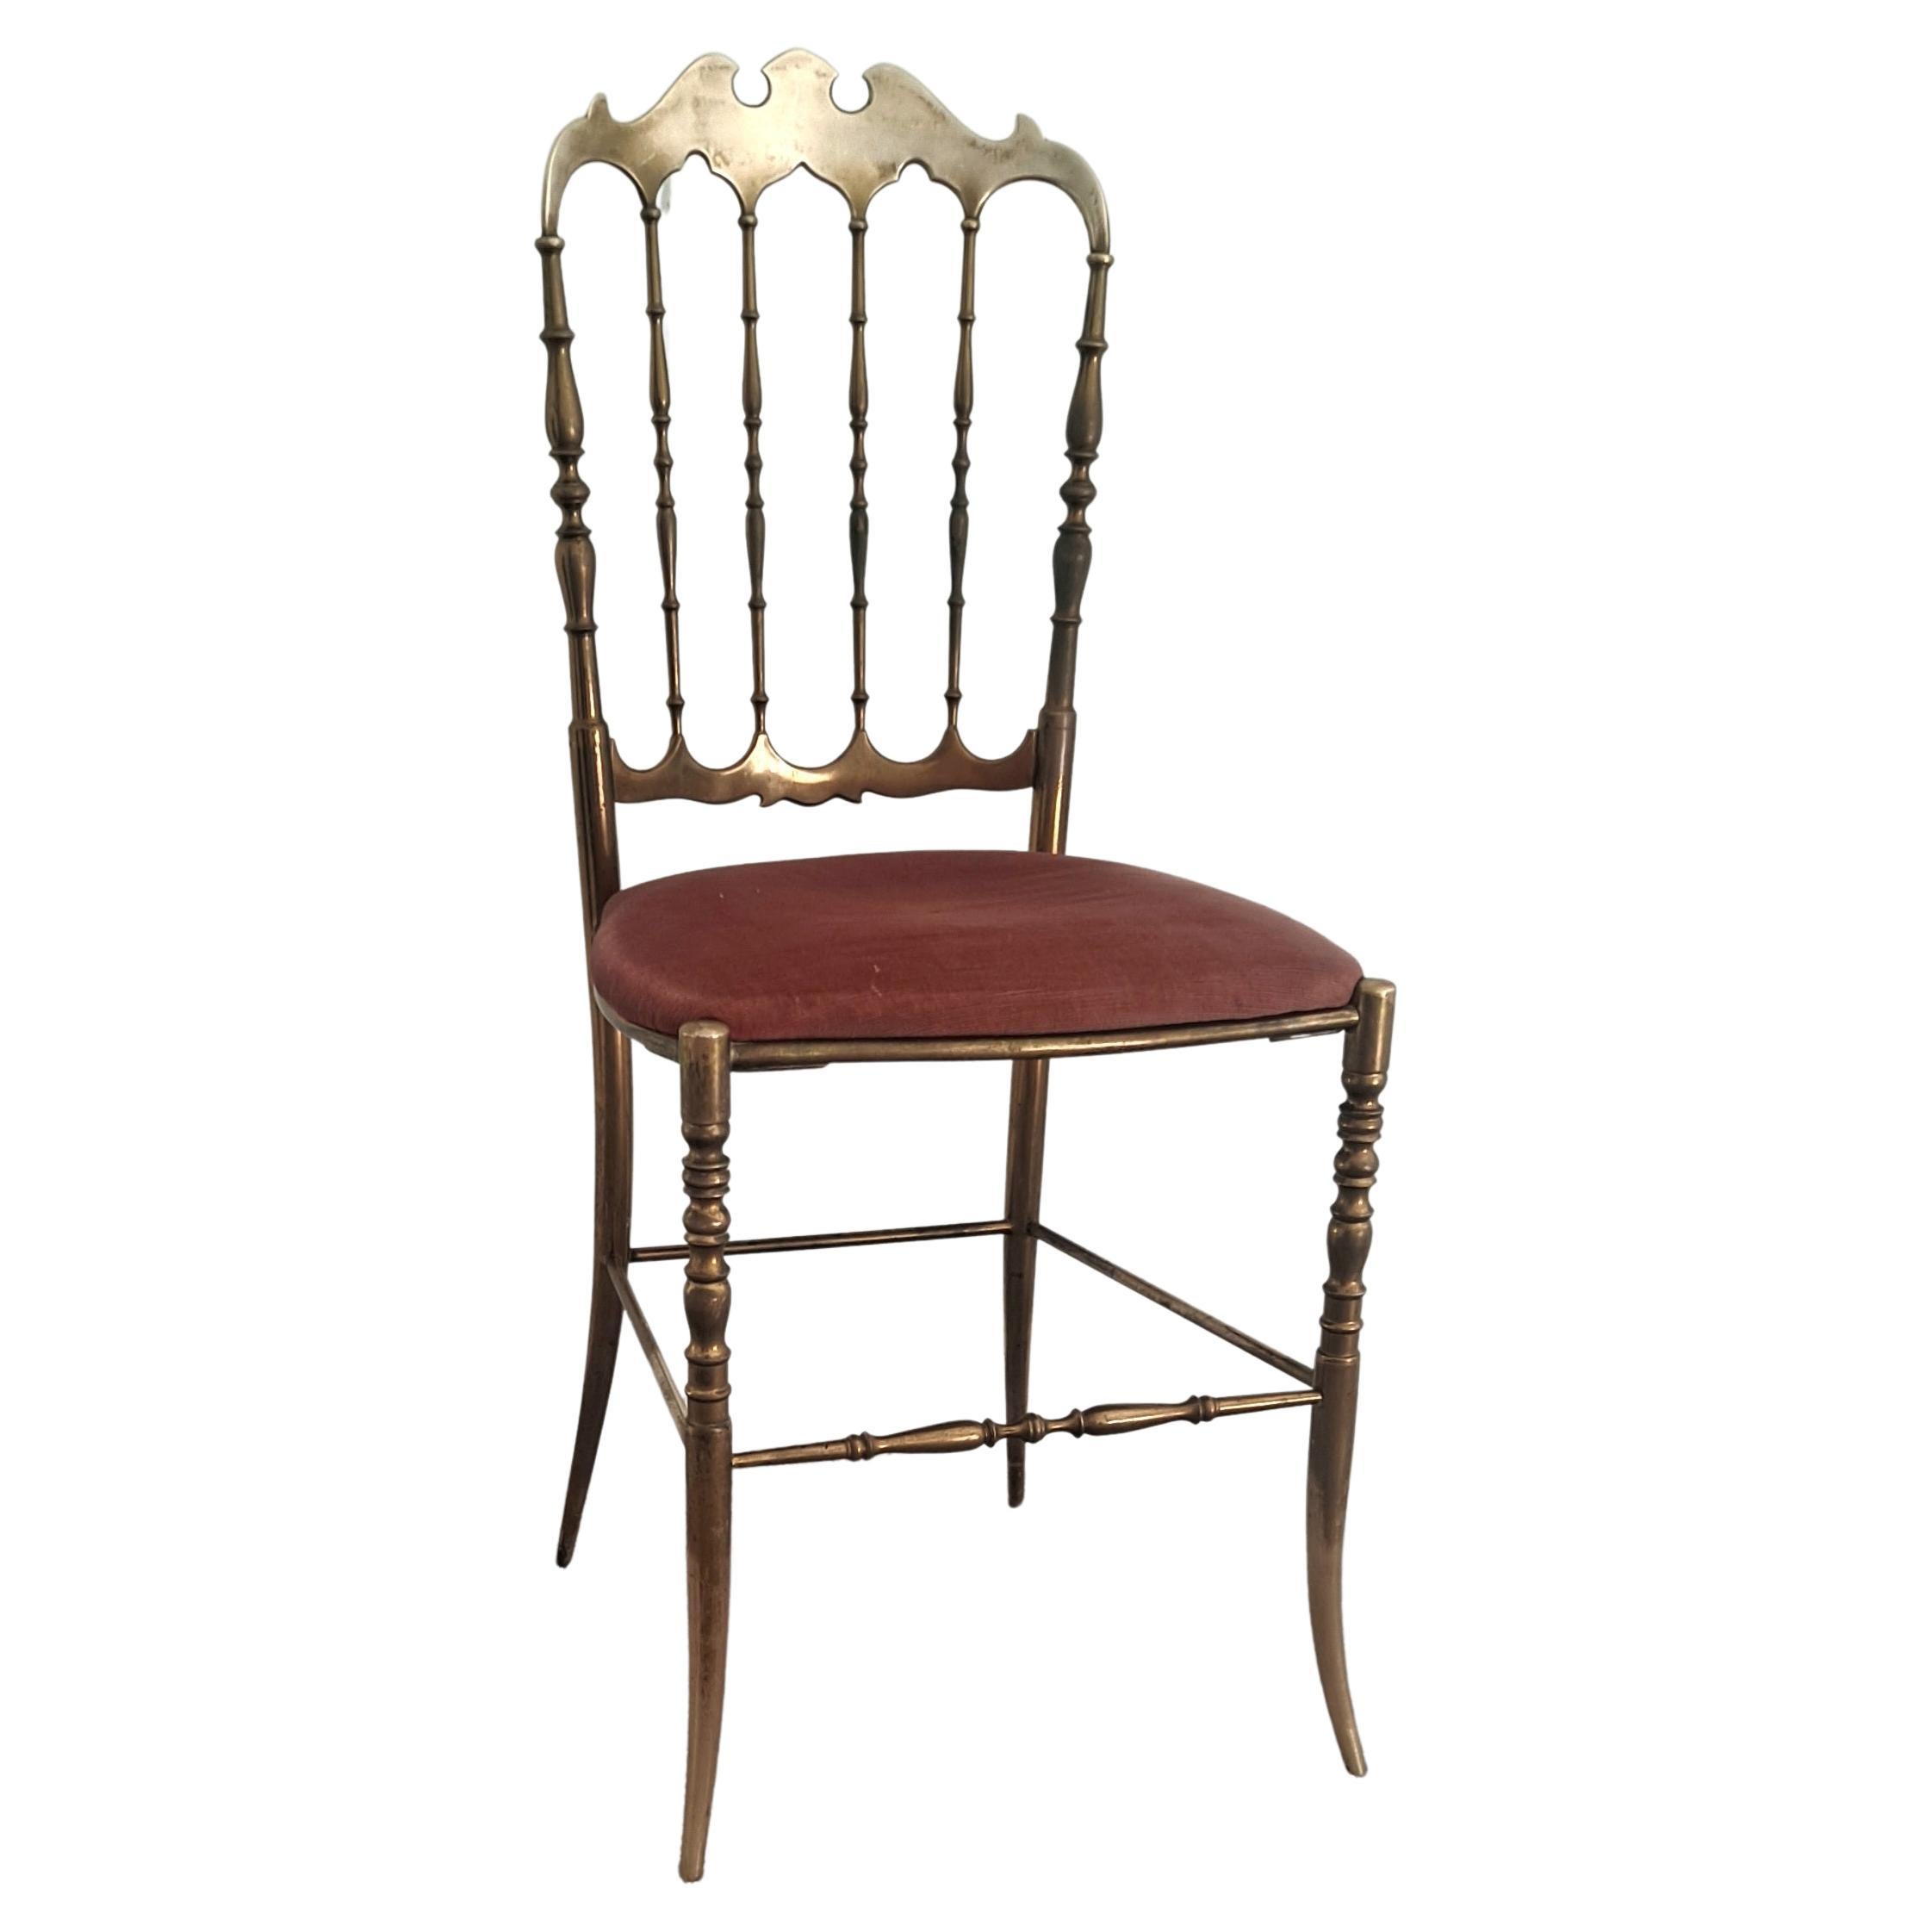 Neoklassizistischer italienischer Chiavari-Stuhl aus massivem Messing